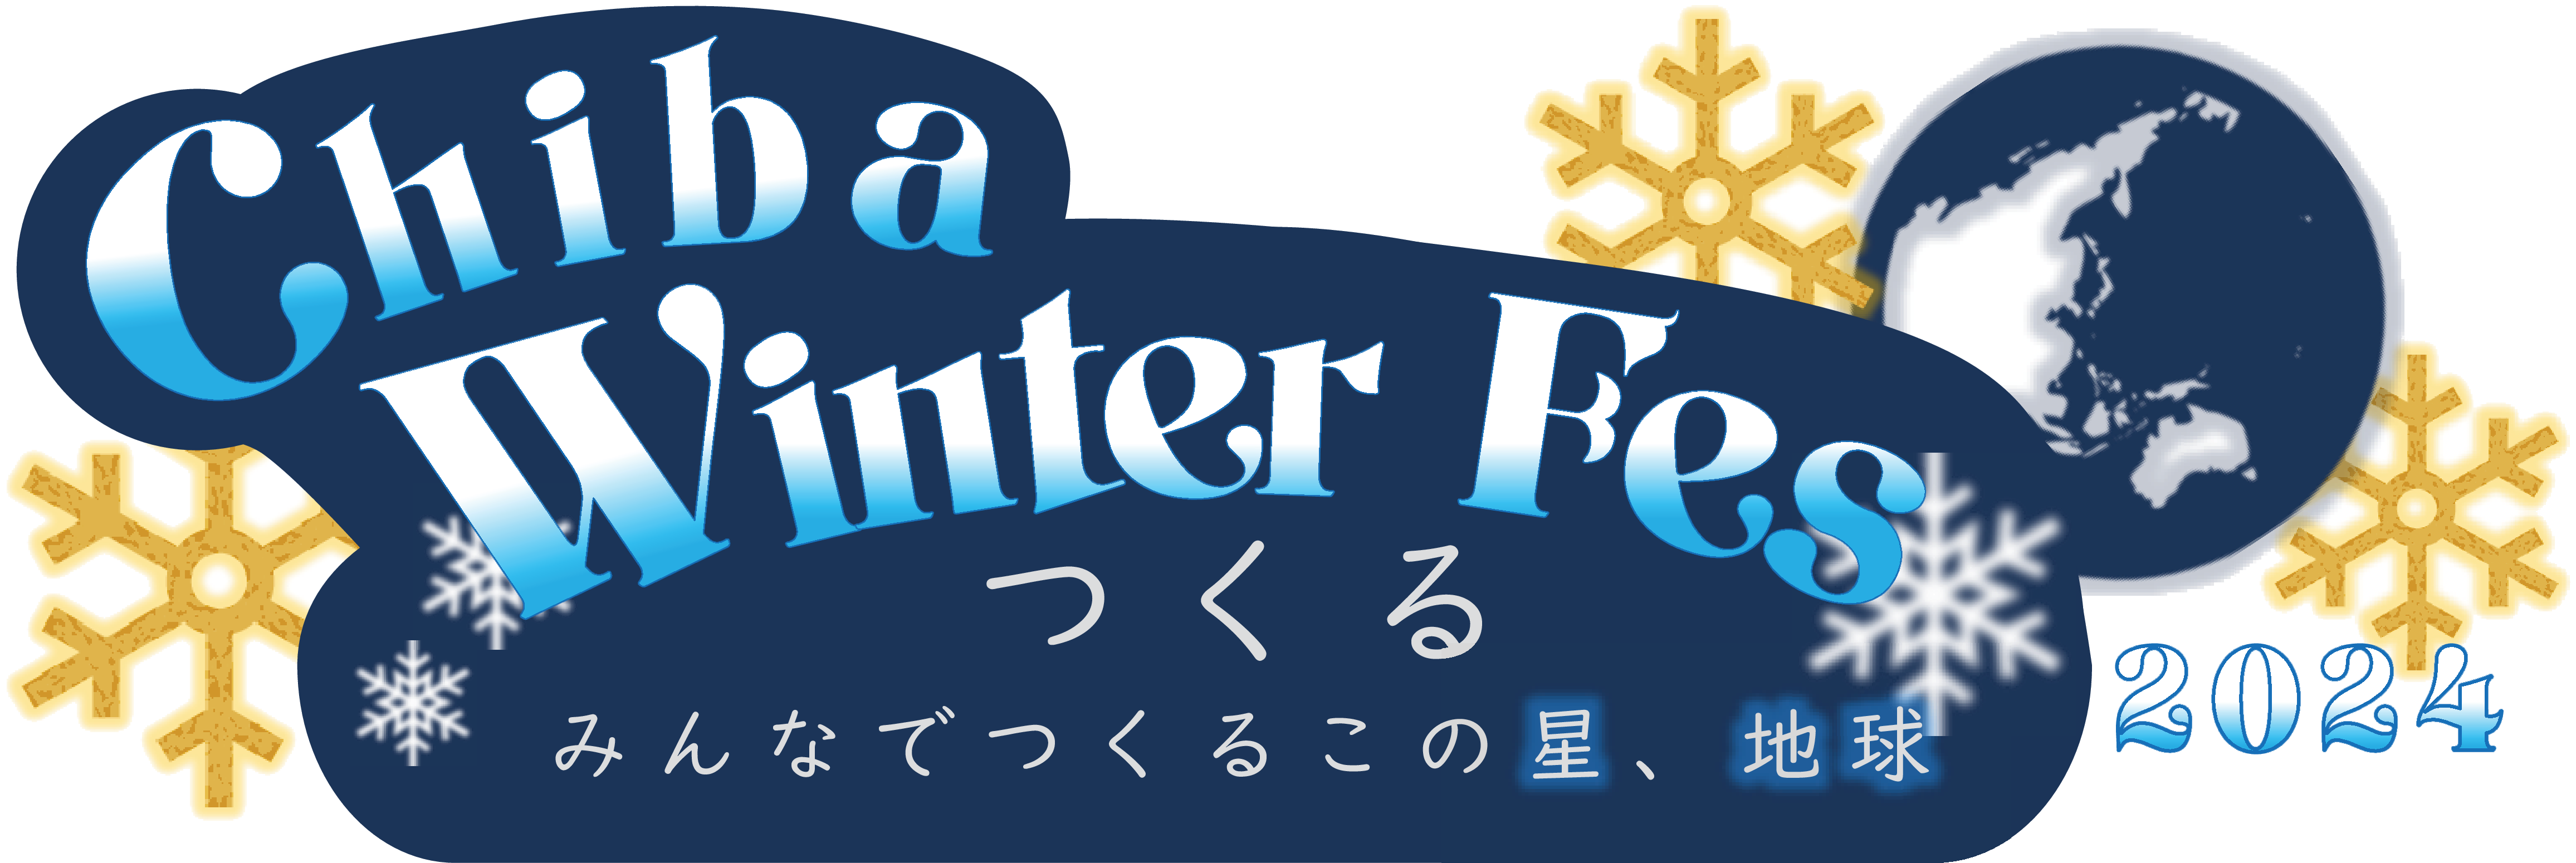 Chiba Winter Fes 2024